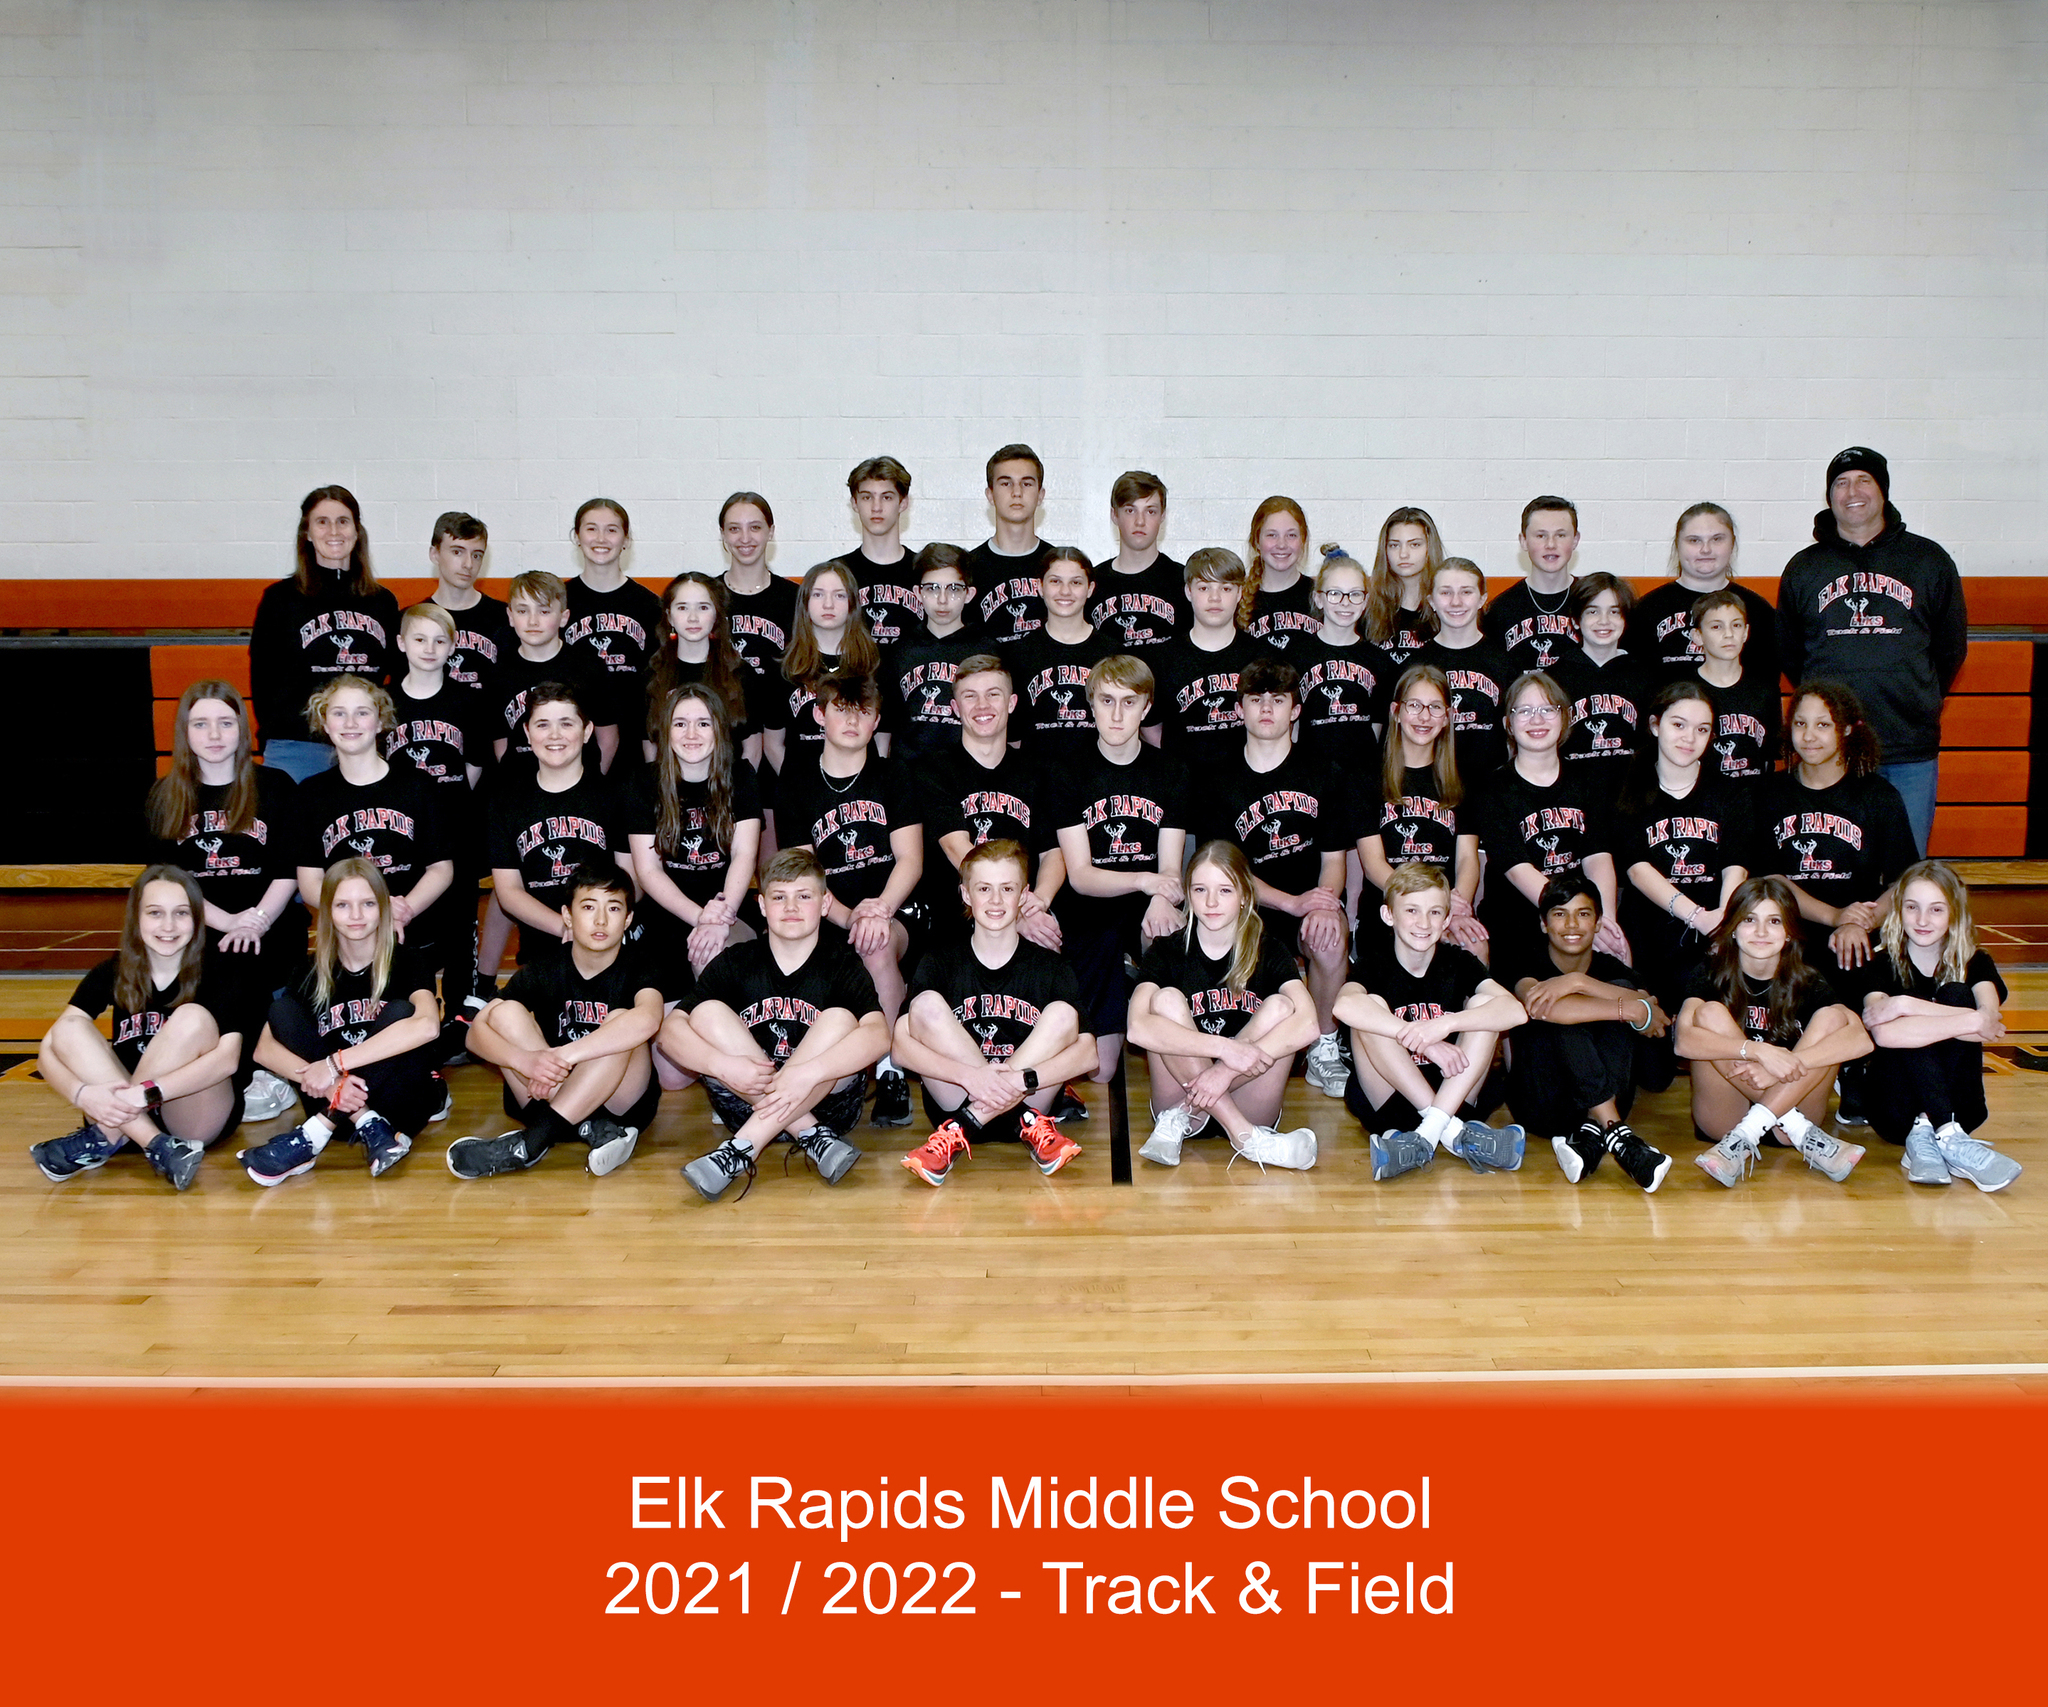 7th grade softball team